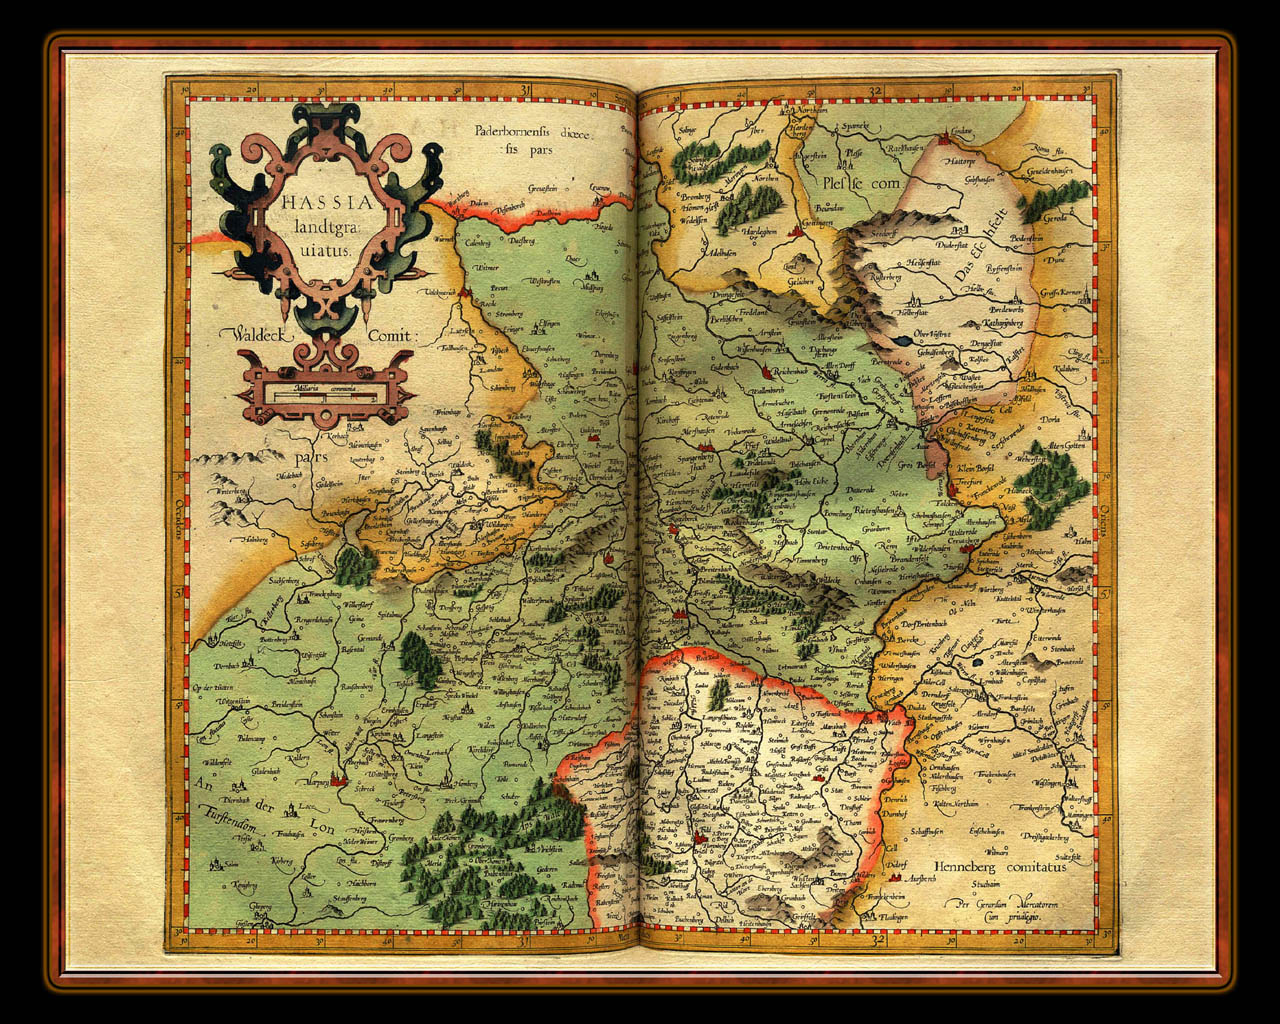 "Gerhard Mercator 1595 World Atlas - Cosmographicae" - Wallpaper No. 35 of 106. Right click for saving options.